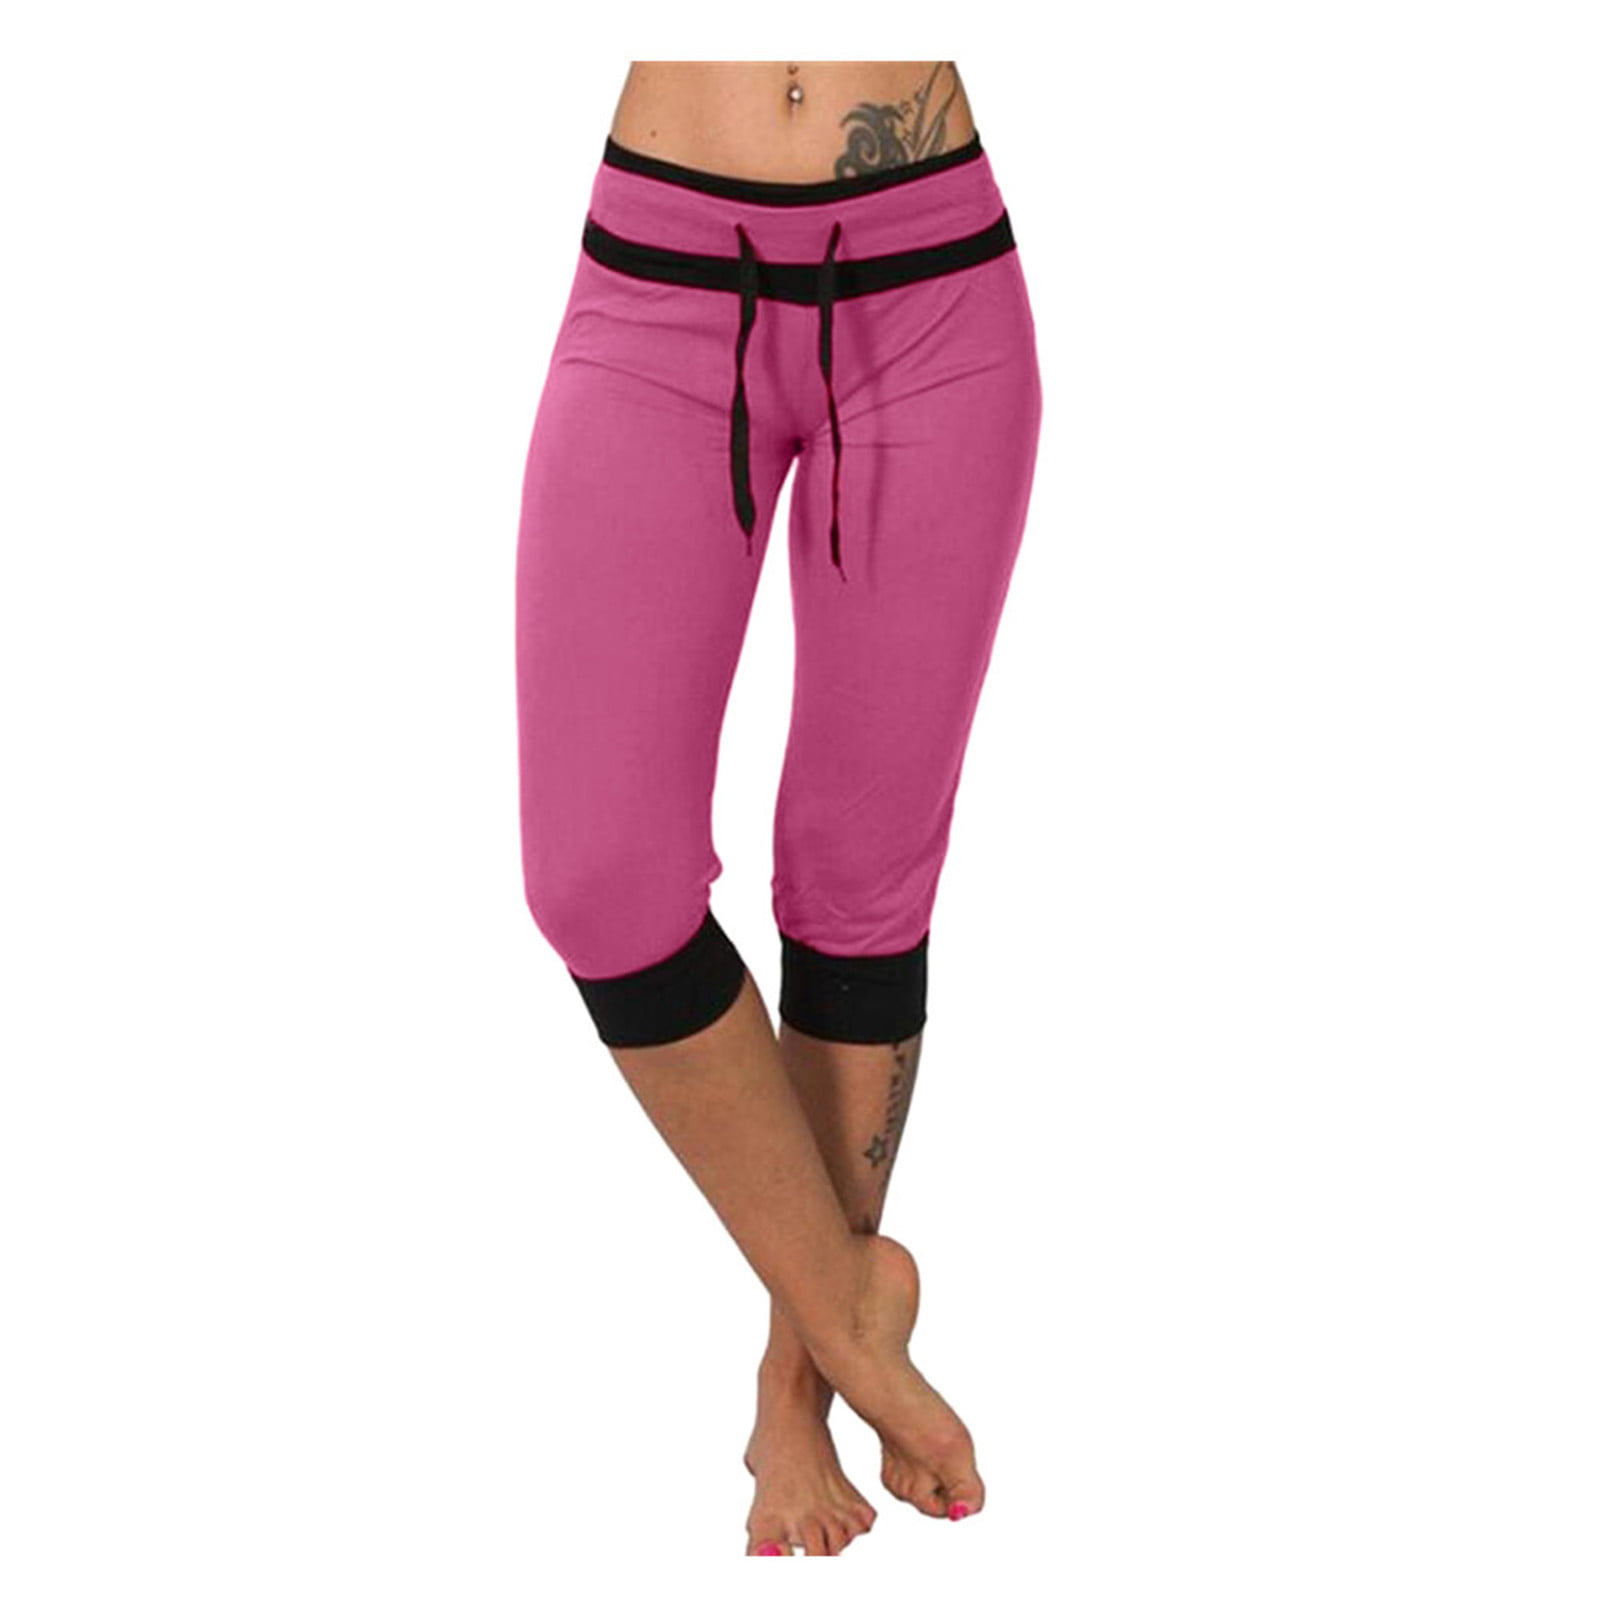 MRULIC yoga pants Women's Fashion Short Pants Casual Chino Pants Solid  Trouser Hot Pink + XL 